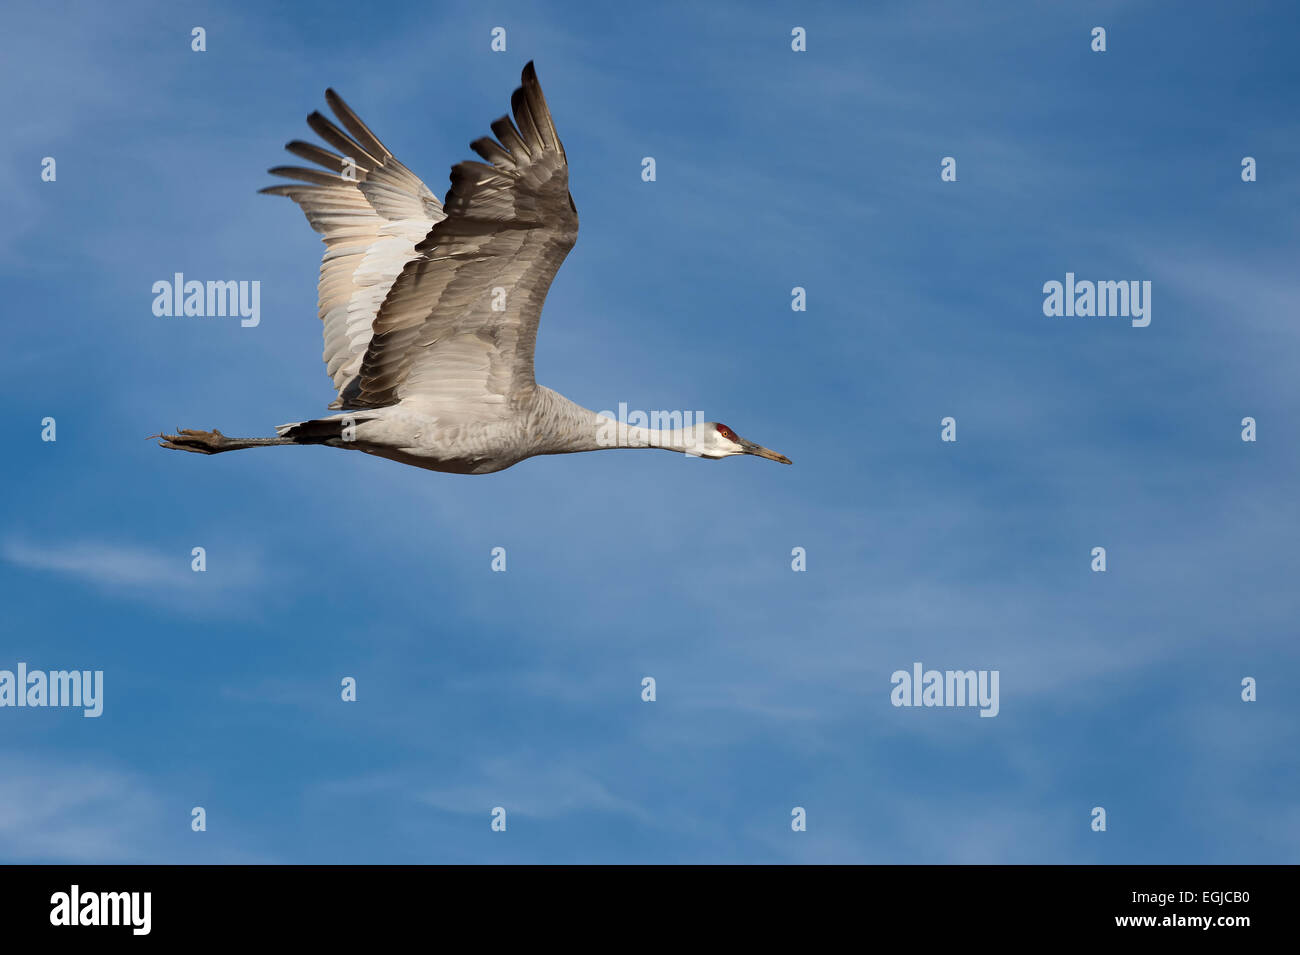 A sandhill crane flying in the sky of Bosque Del Apache in New Mexico, USA Stock Photo